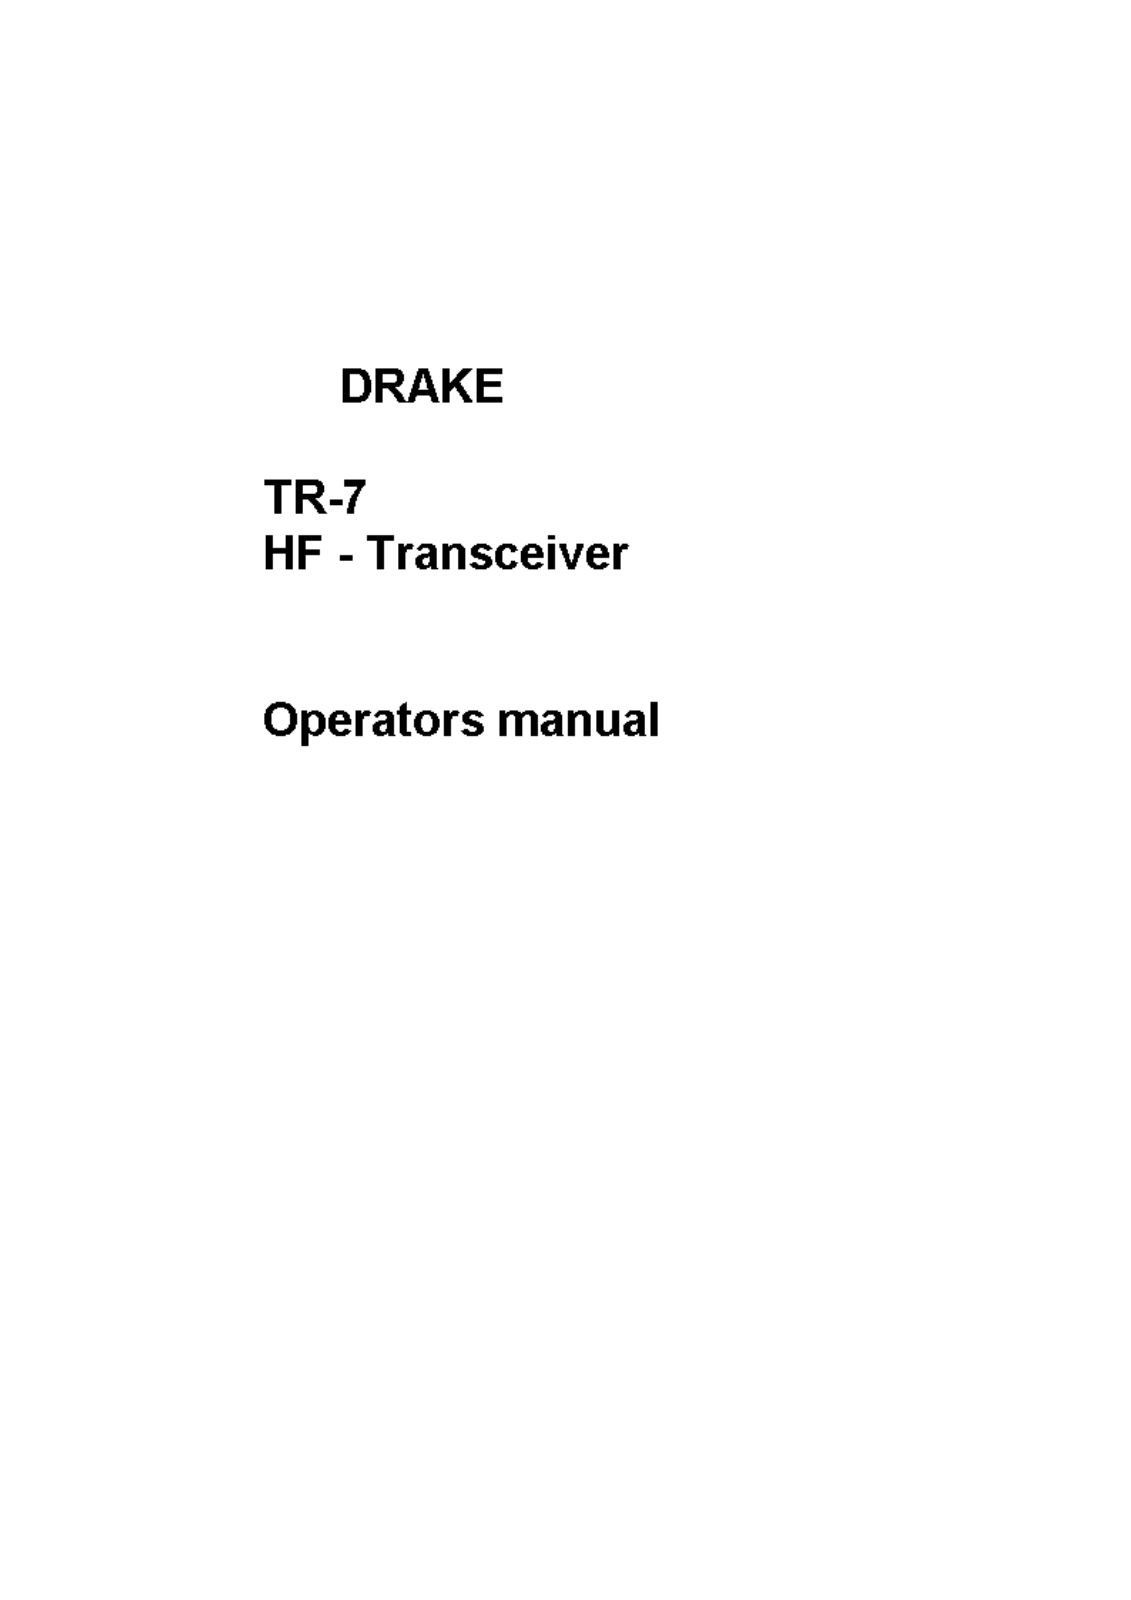 DRAKE TR-7 Operation Manual